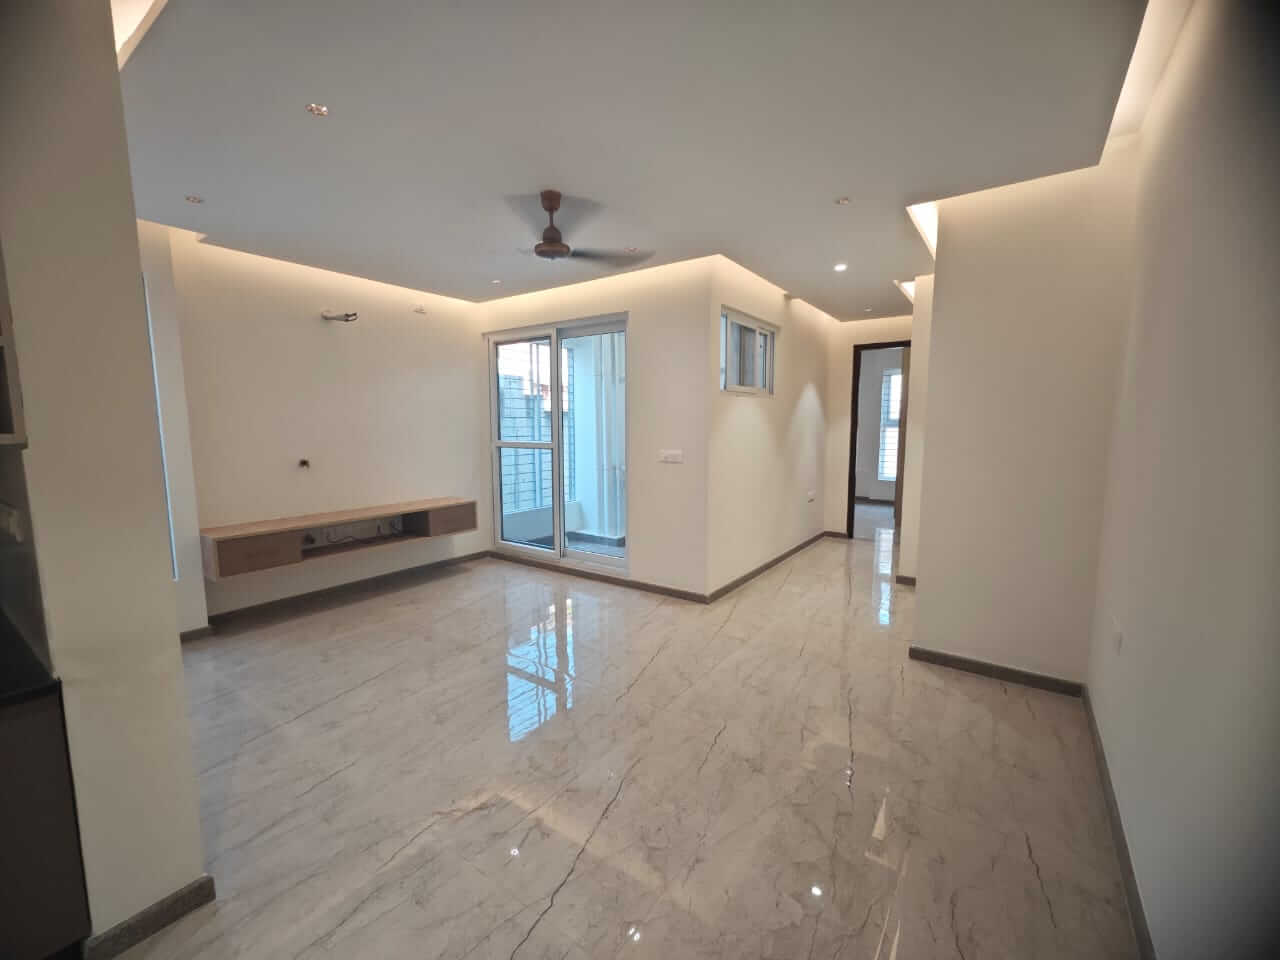 2 BHK Apartment / Flat for Rent 1365 Sq. Feet at Bangalore
, Indira Nagar